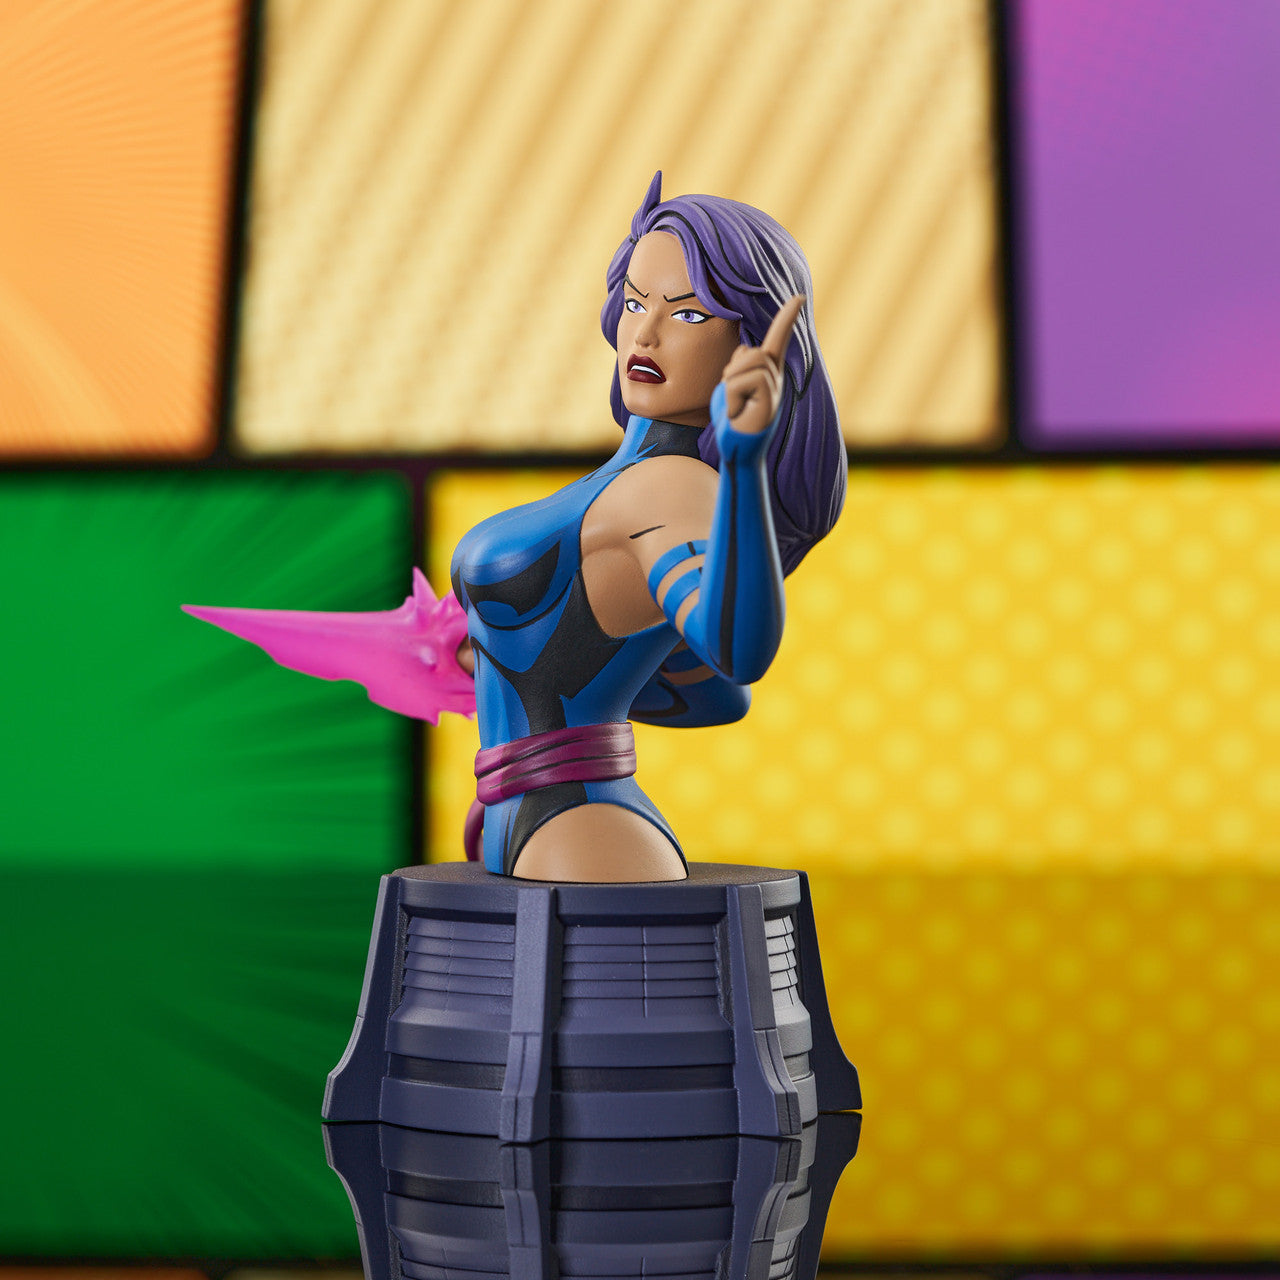 Marvel Animated X-Men Psylocke 1:7 Scale Mini-Bust by Diamond Gallery -Diamond Gallery - India - www.superherotoystore.com